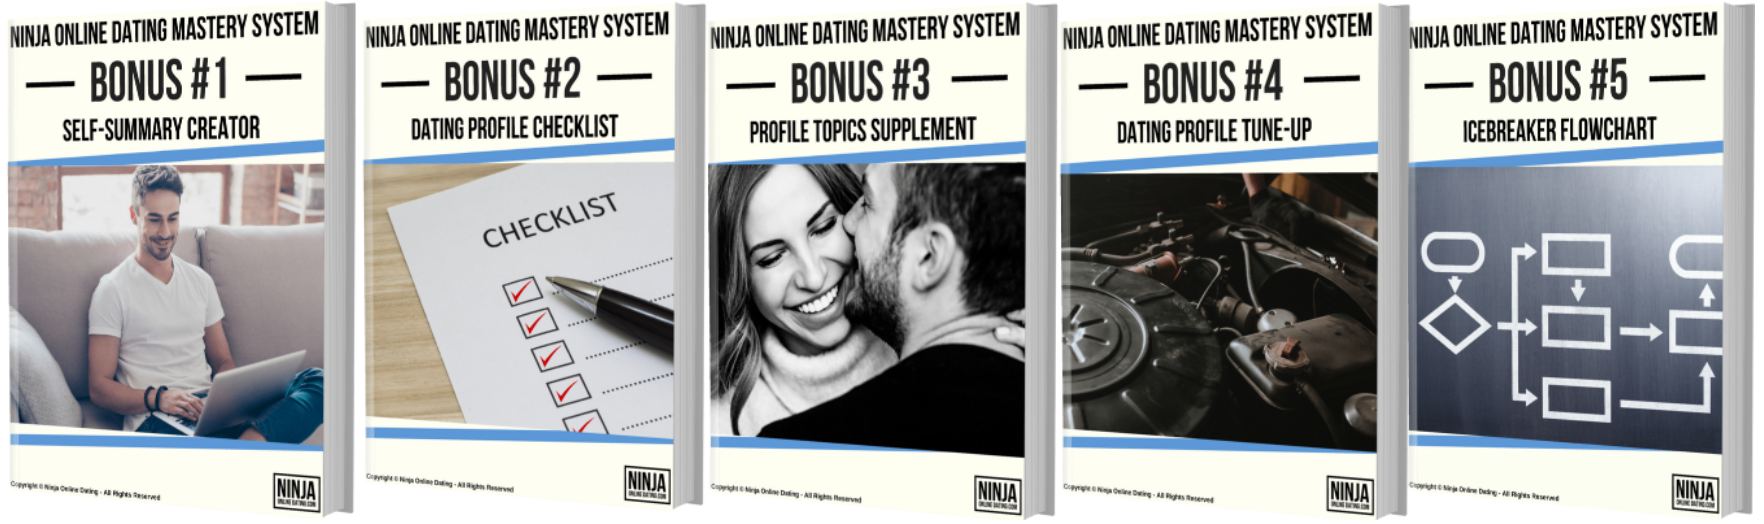 Online Dating Mastery System - Bonus Level 1